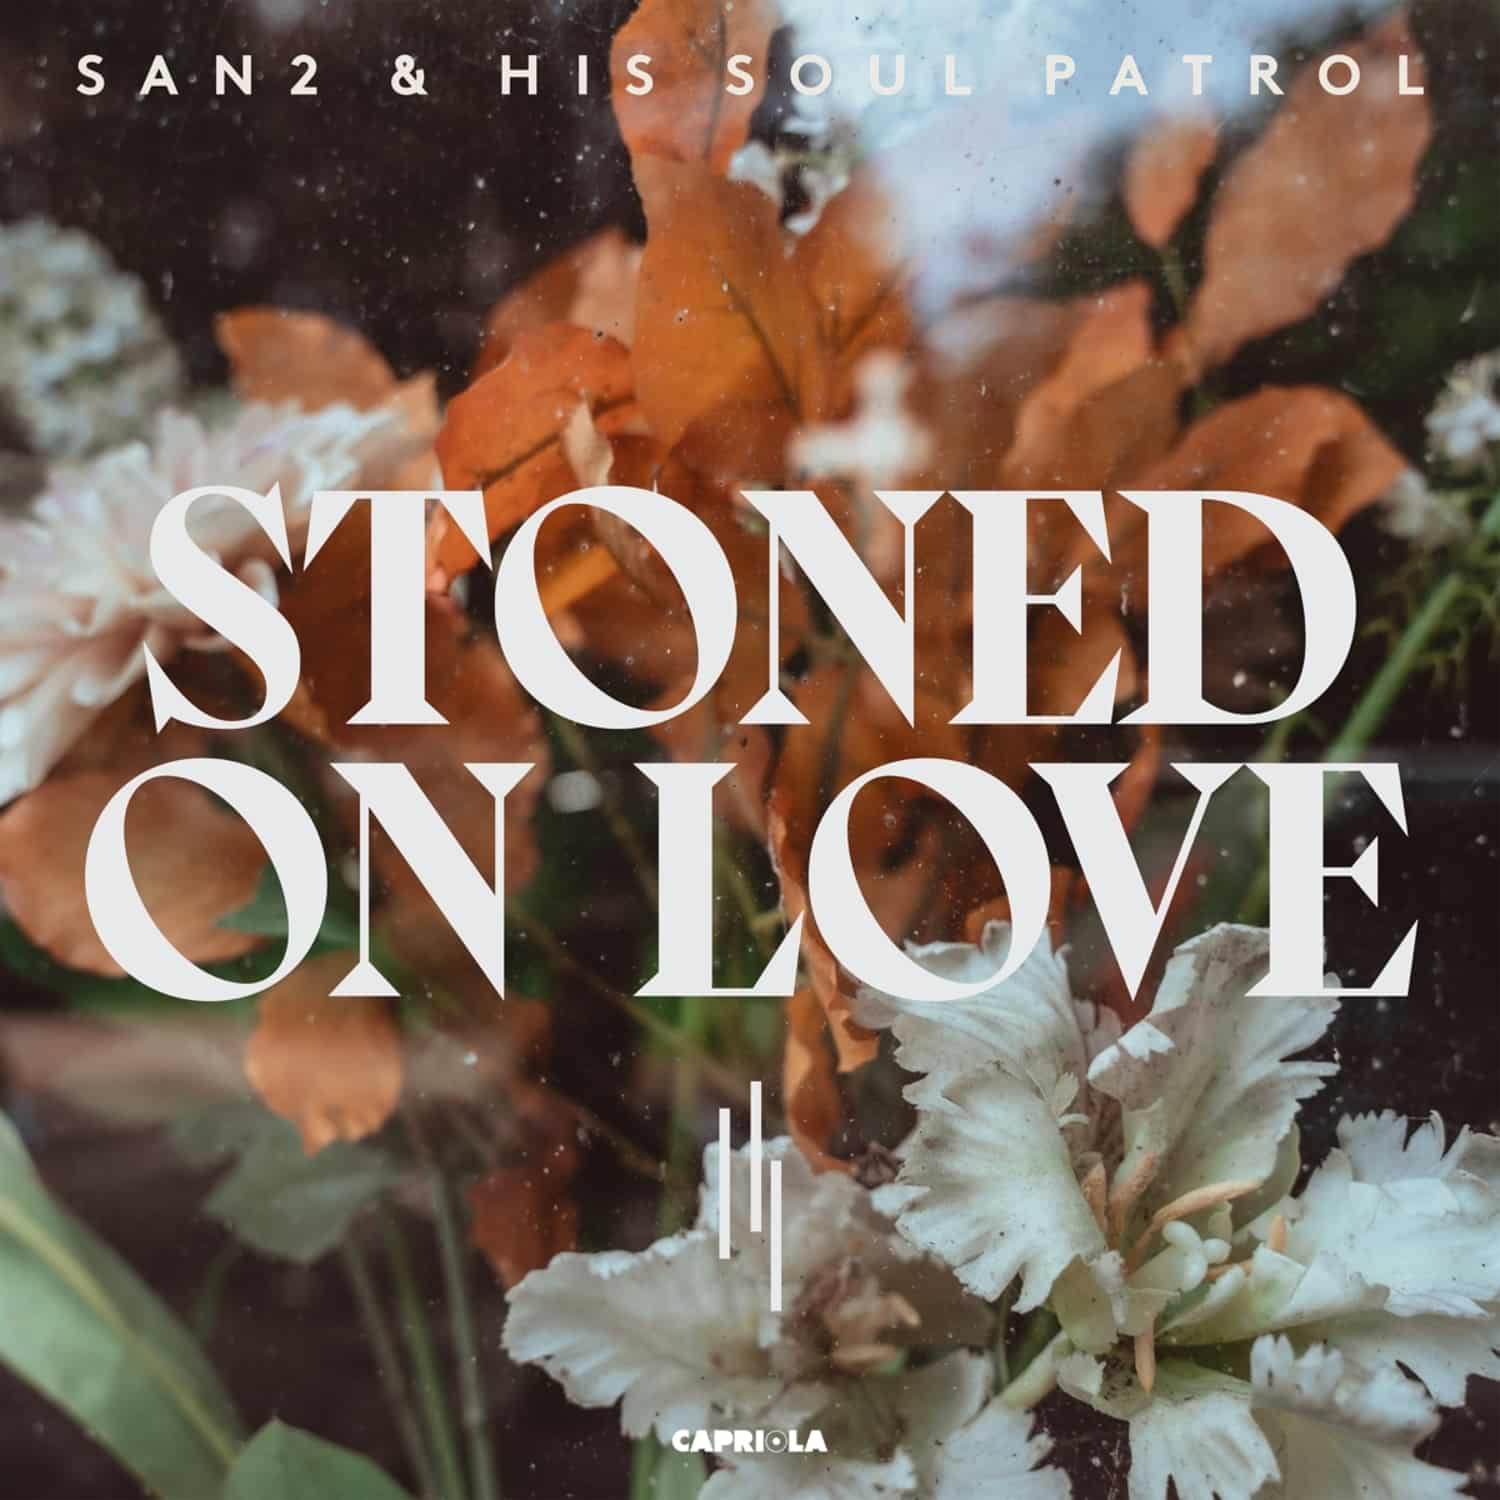 San2 & His Soul Patrol - STONED ON LOVE 